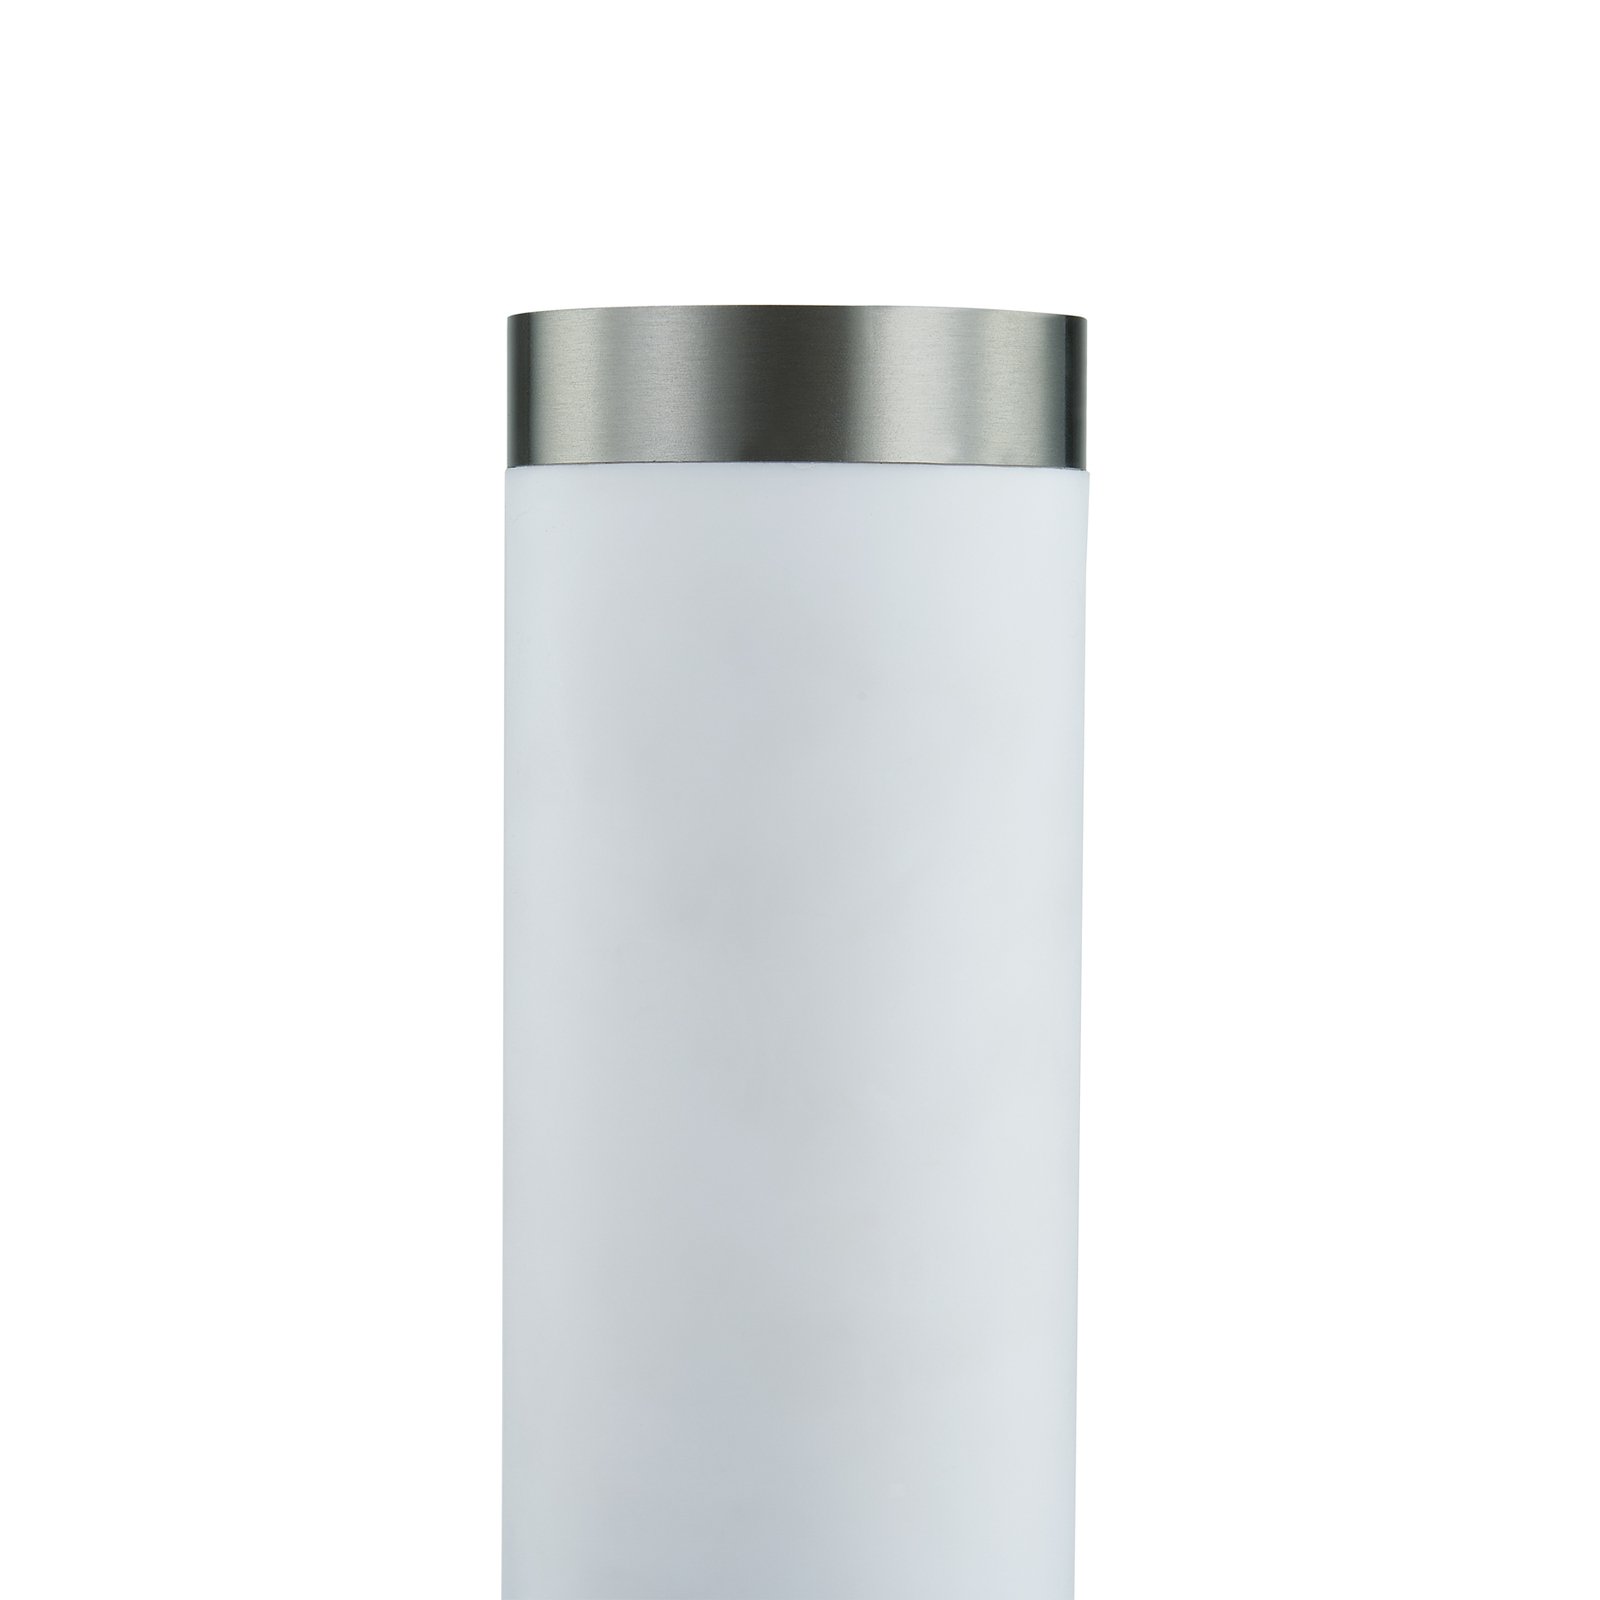 Lindby Statius sokkellamp, grijs, roestvrij staal, sensor, 45 cm